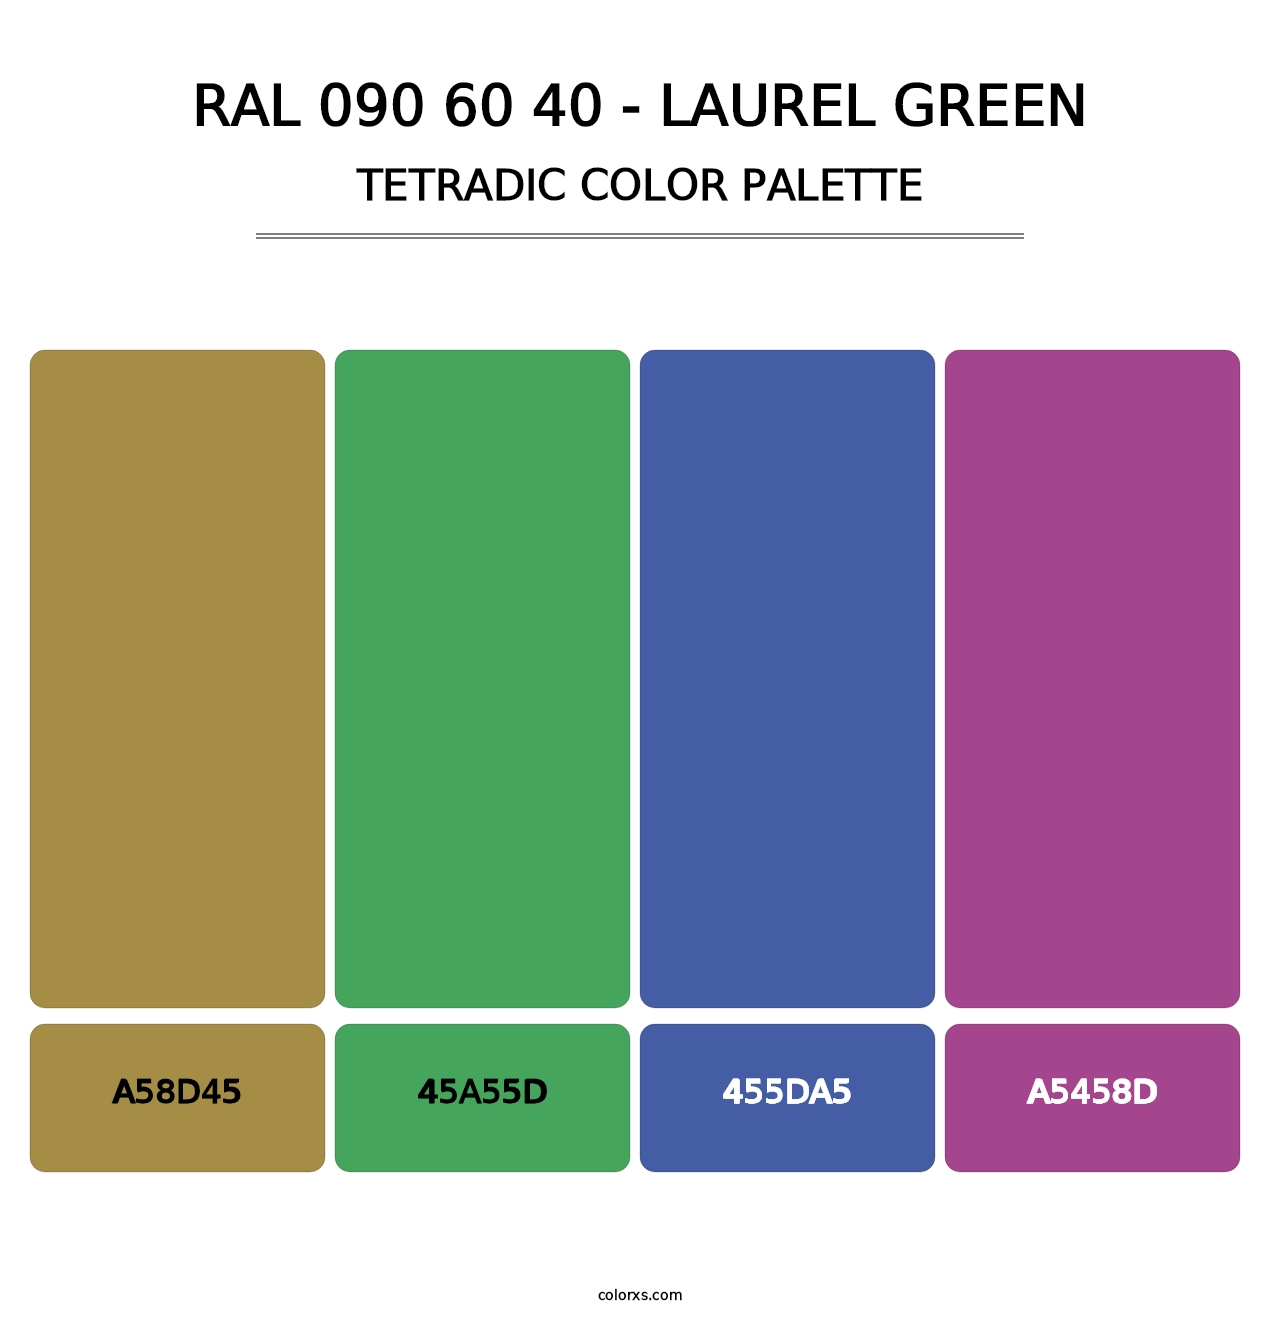 RAL 090 60 40 - Laurel Green - Tetradic Color Palette